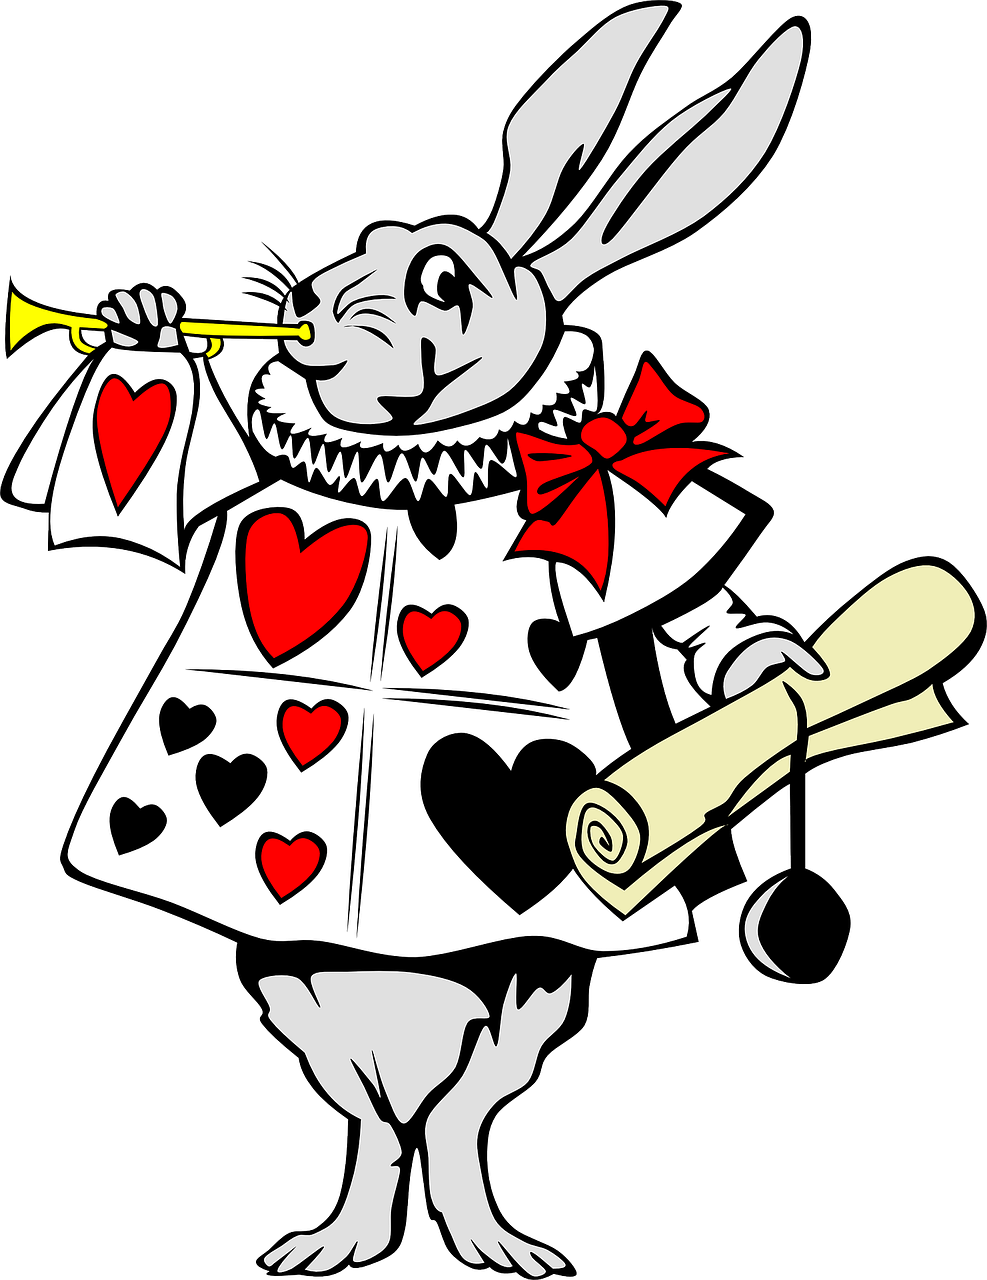 Alice in Wonderland rabbit